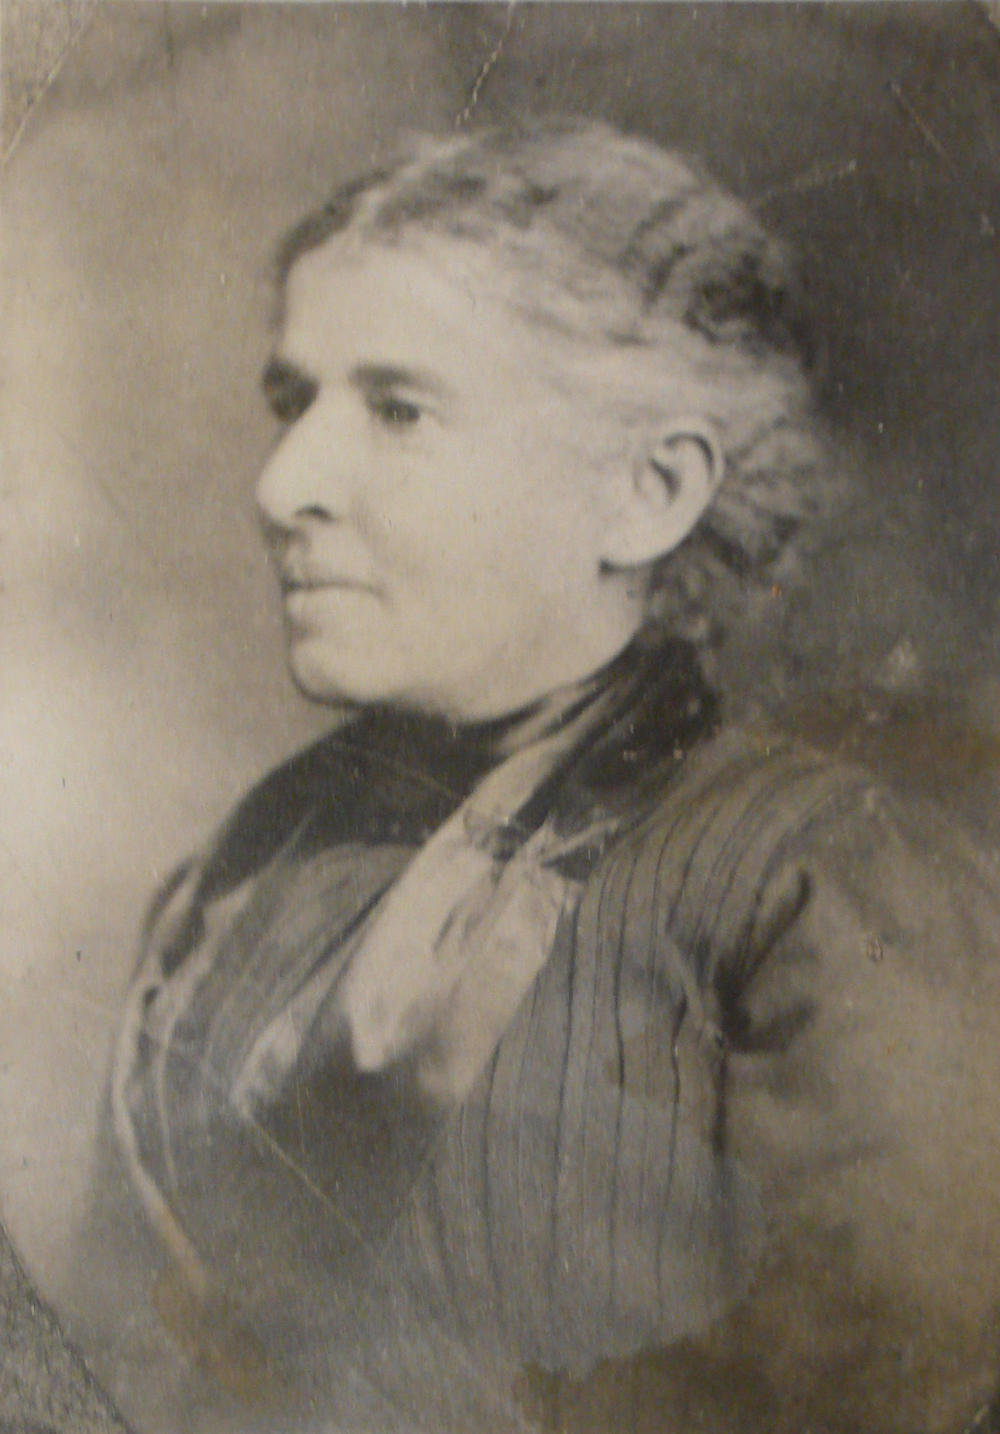 A portrait of Martha S. Jones' great-great-grandmother, Susan Davis, who was born enslaved in Kentucky.